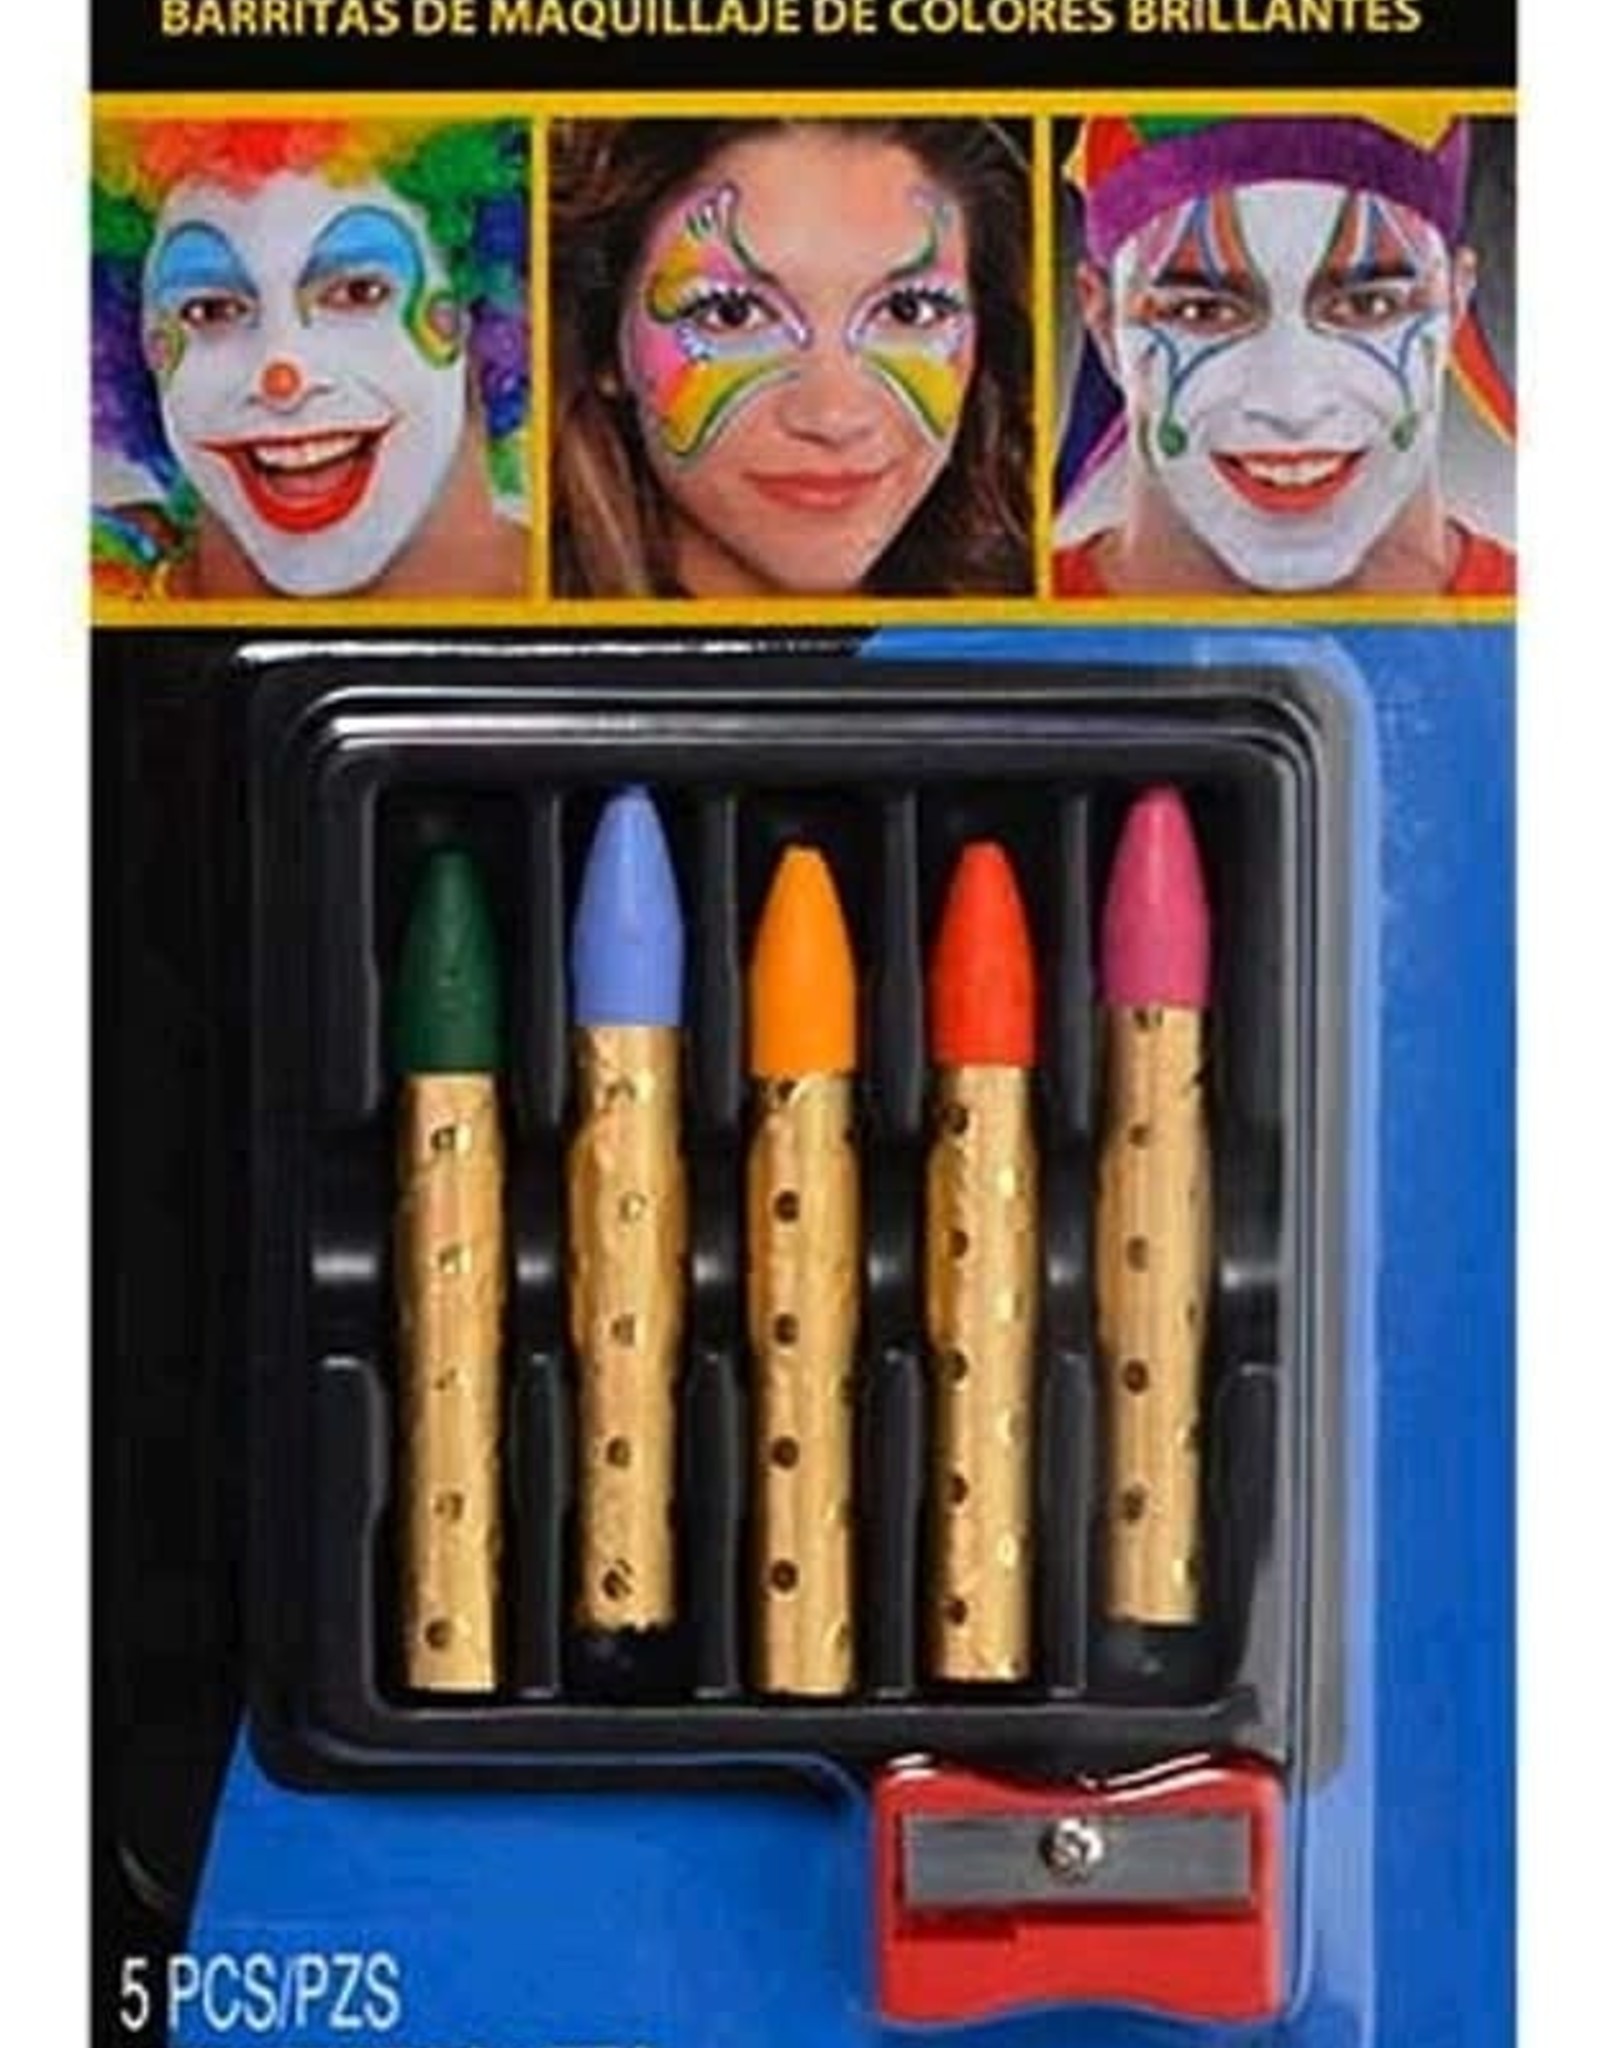 Bright makeup sticks